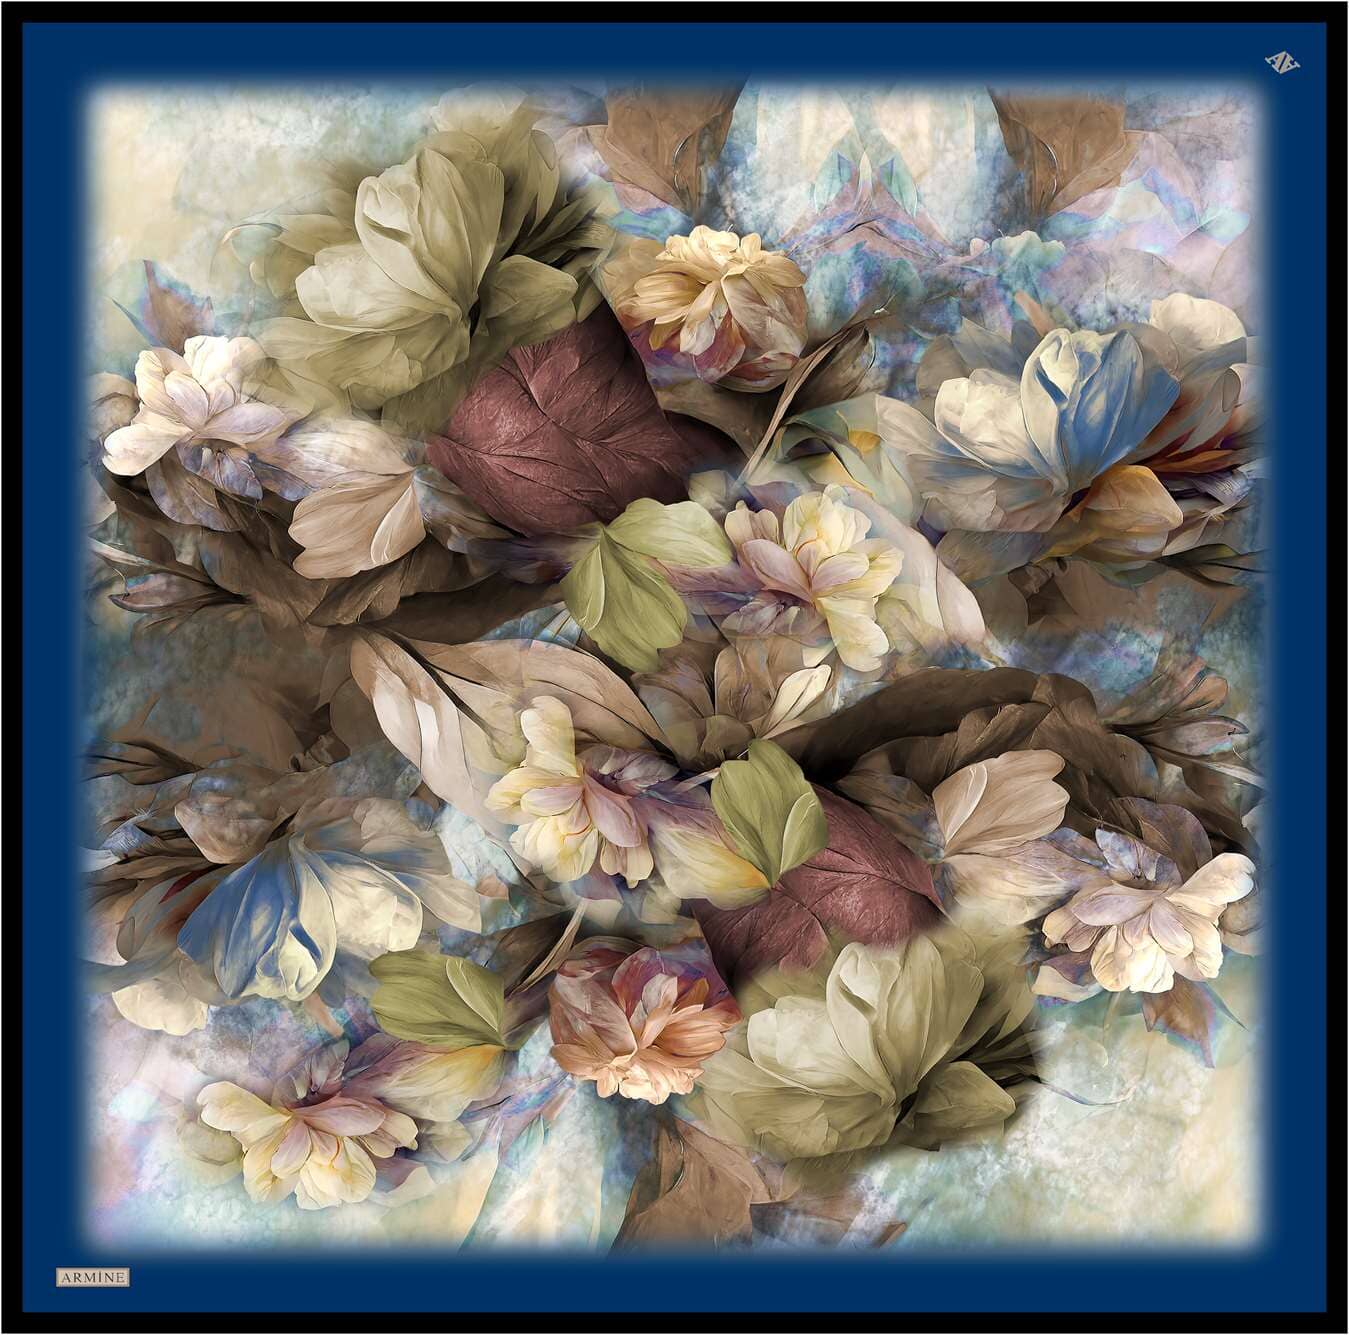 Armine Nocturne Floral Silk Scarf 